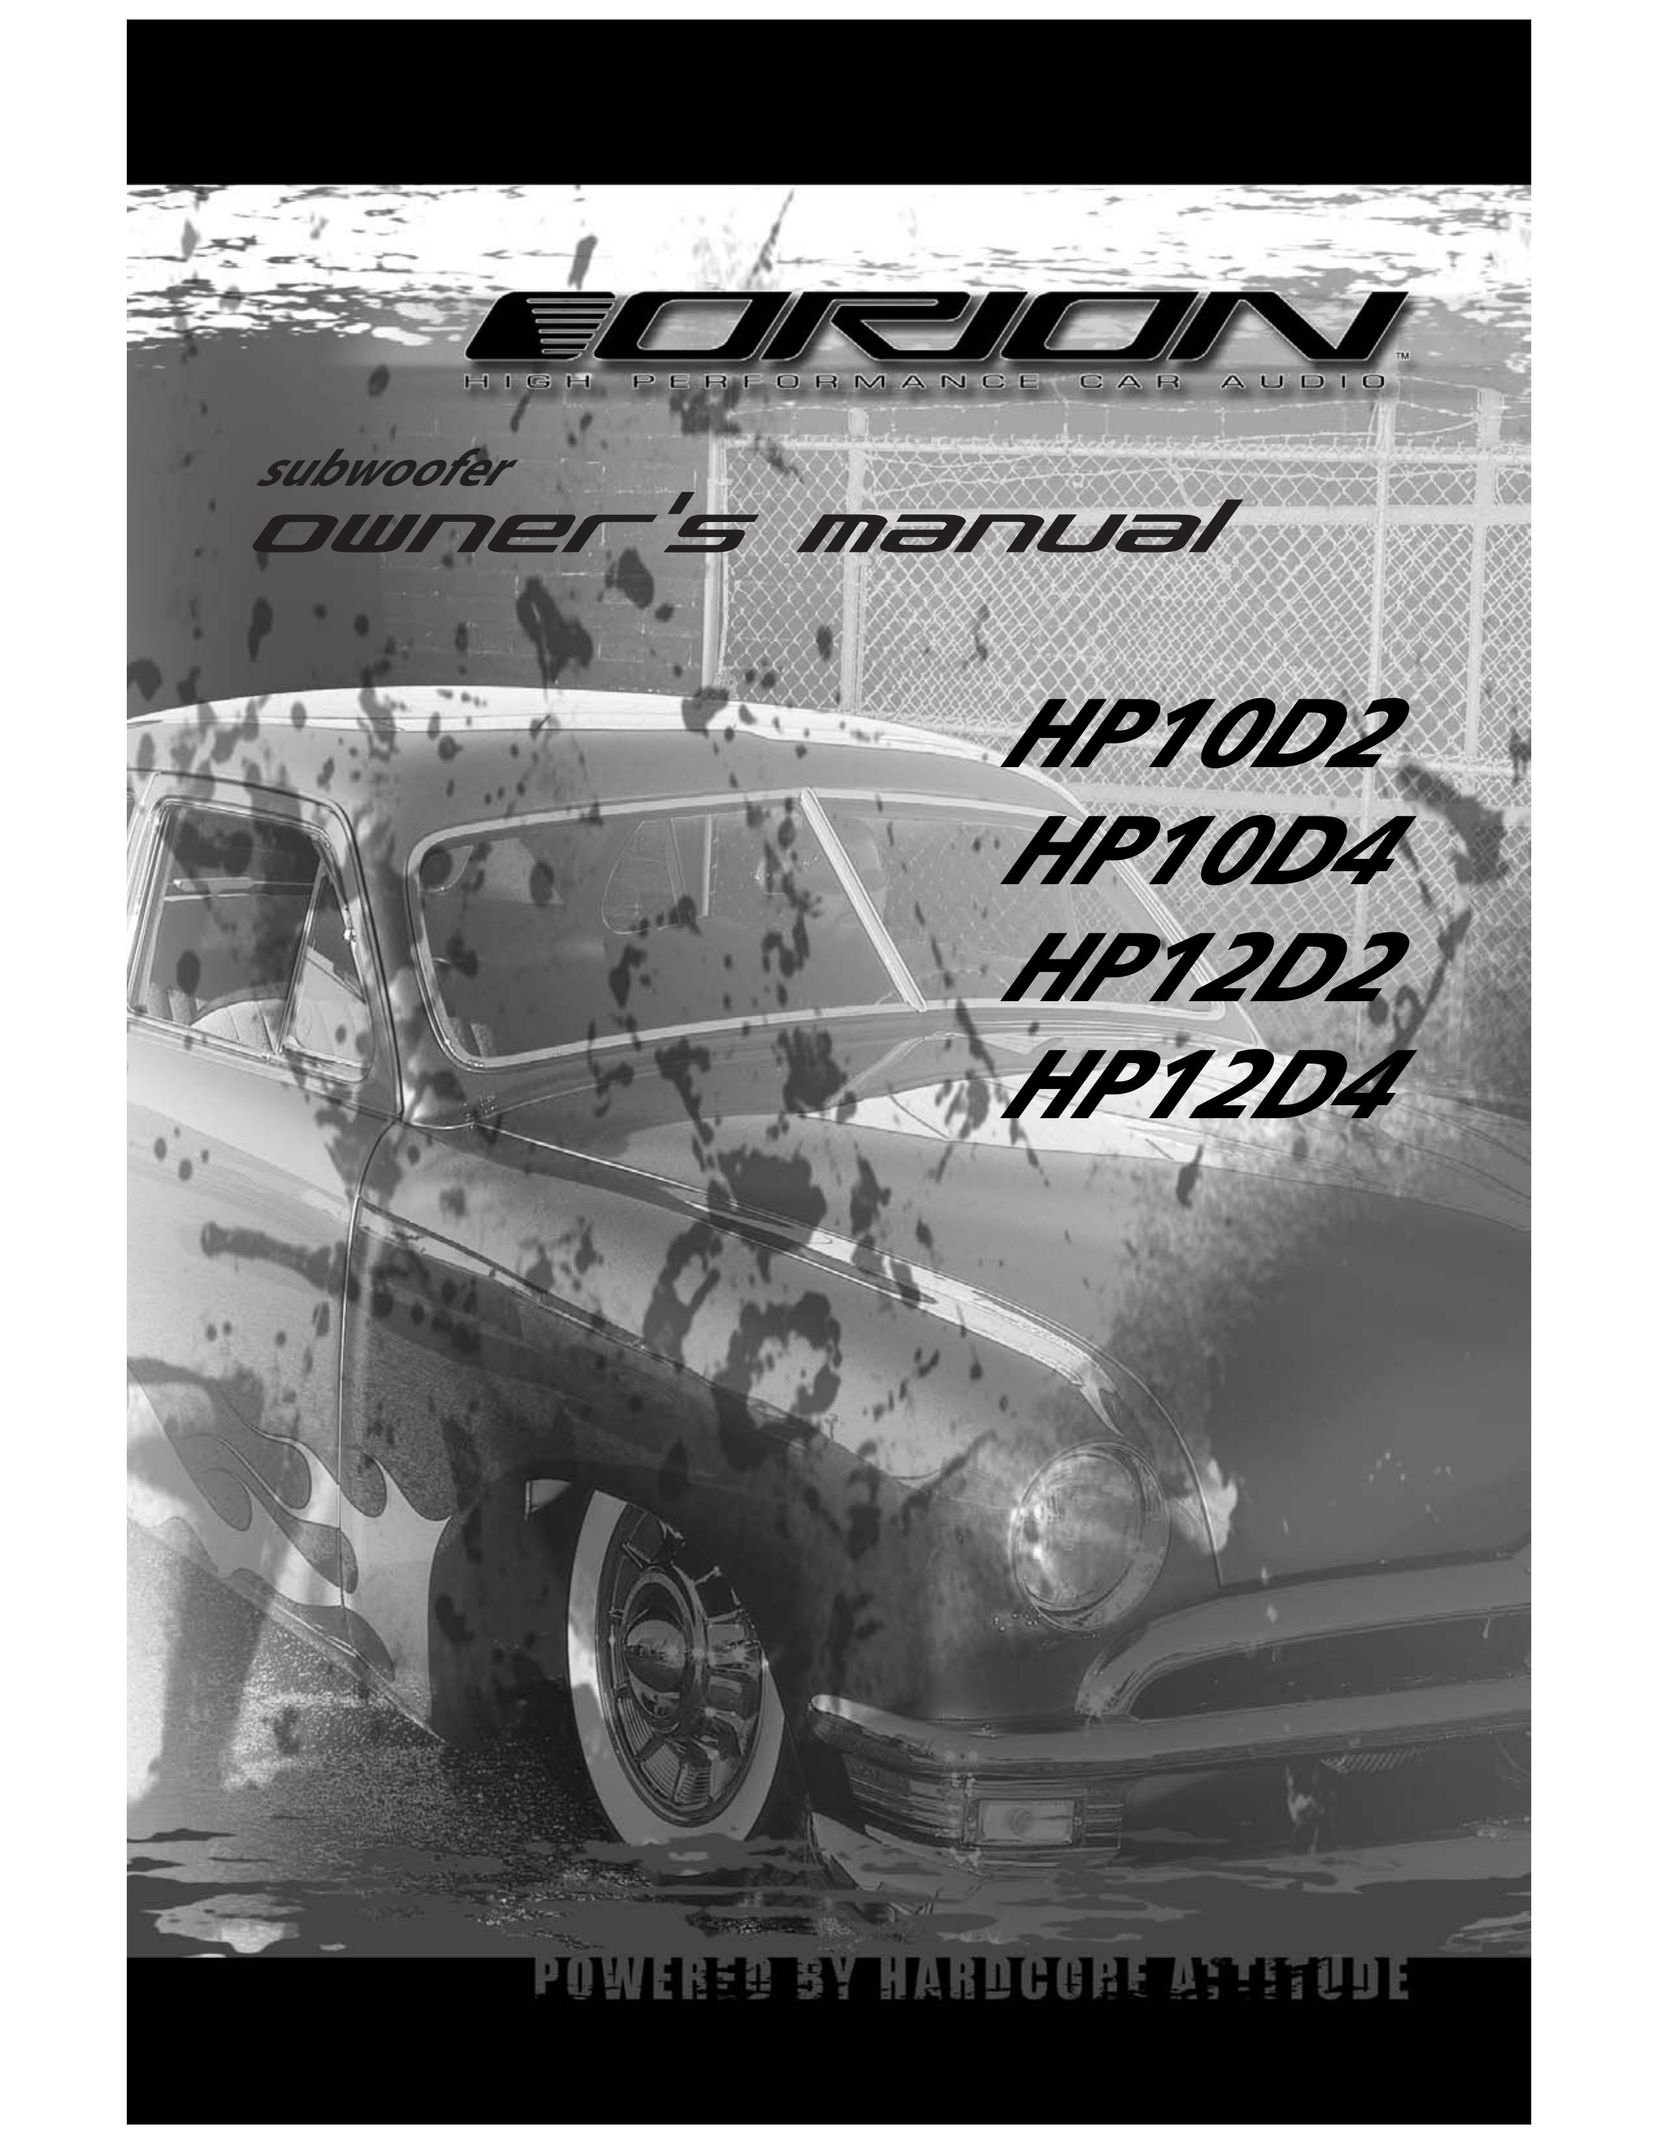 Orion Car Audio HP10D2 Speaker User Manual